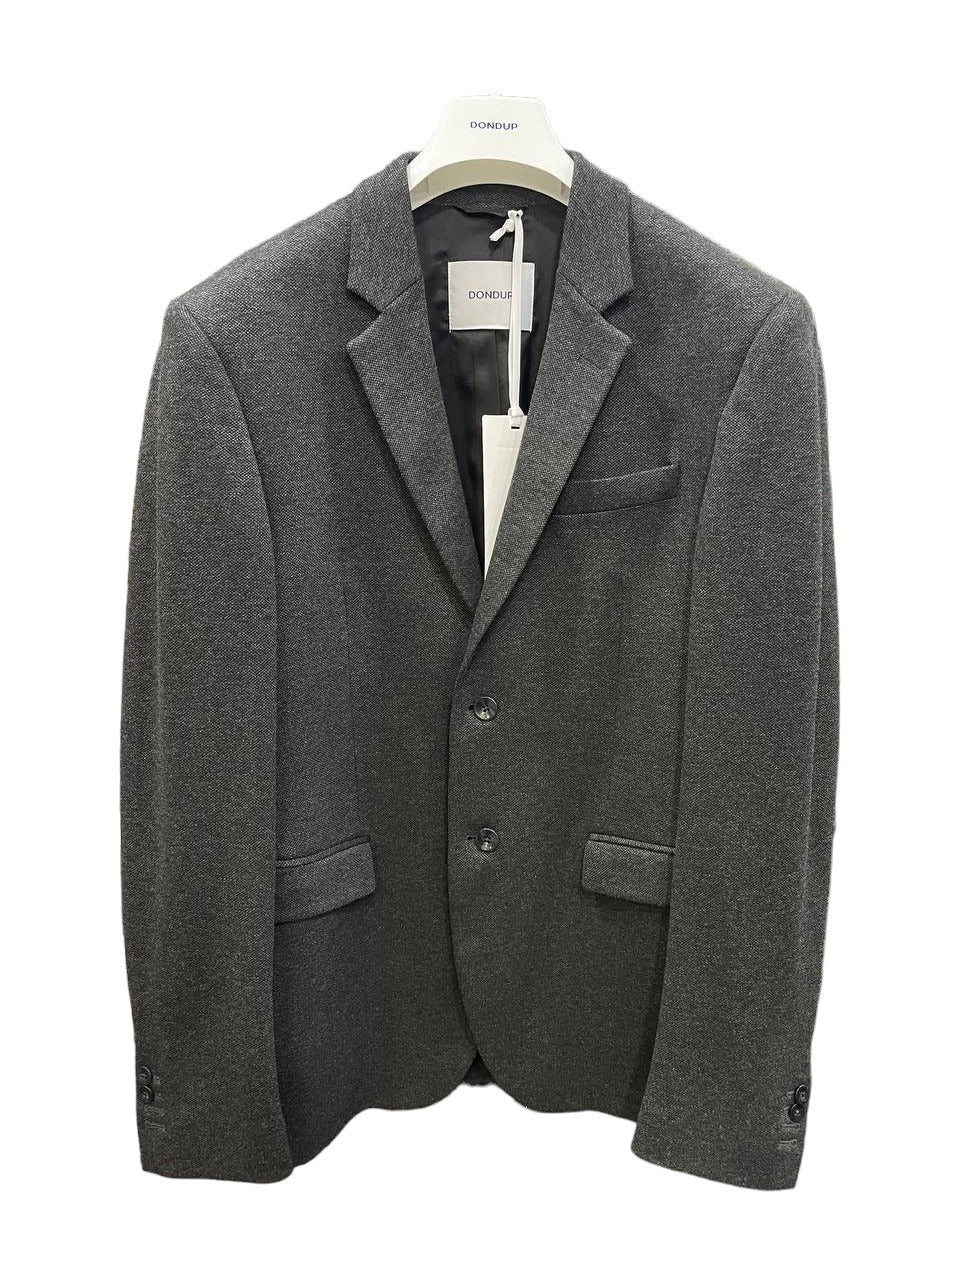 Dondup Men's Gray Jacket